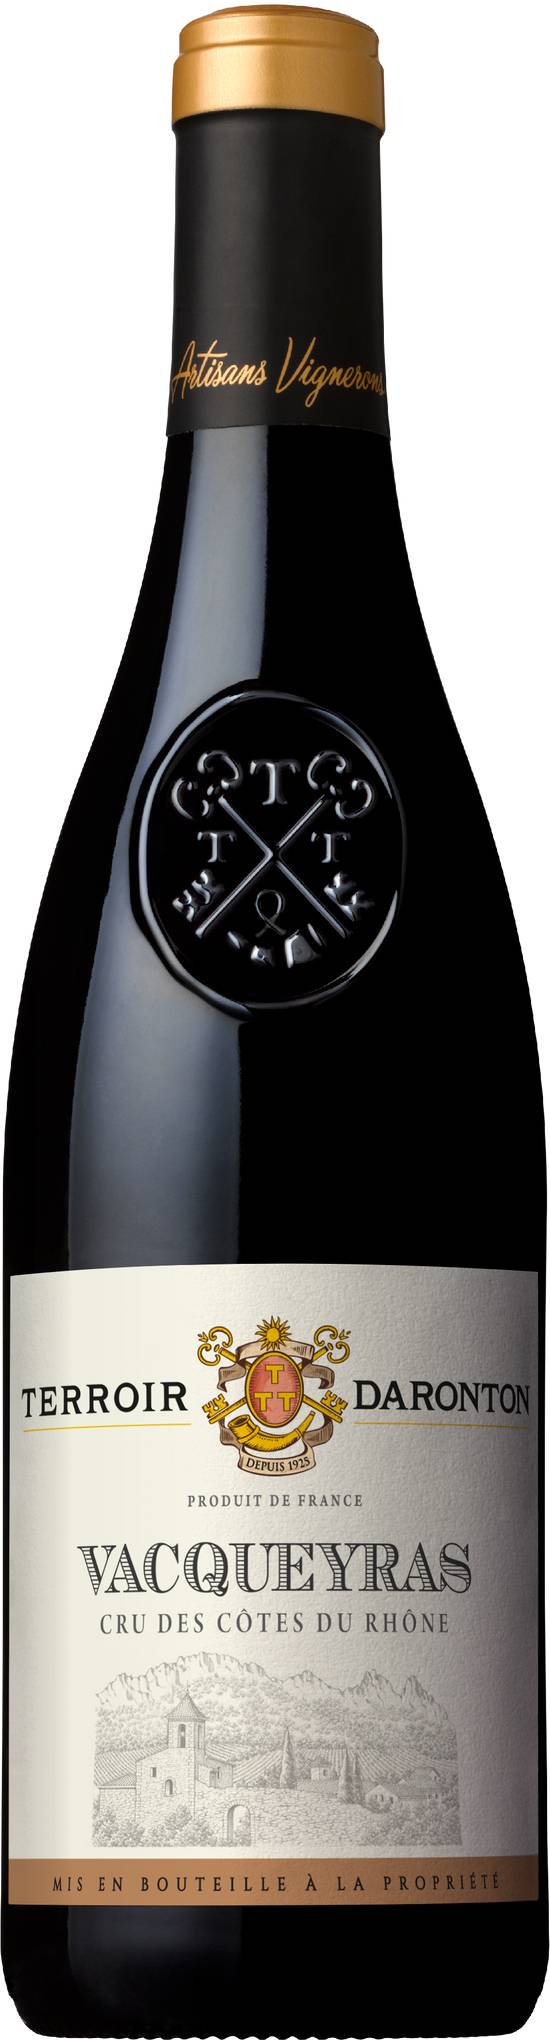 Terroir Daronton - Vin rouge côtes du Rhône vacqueyras (750 ml)